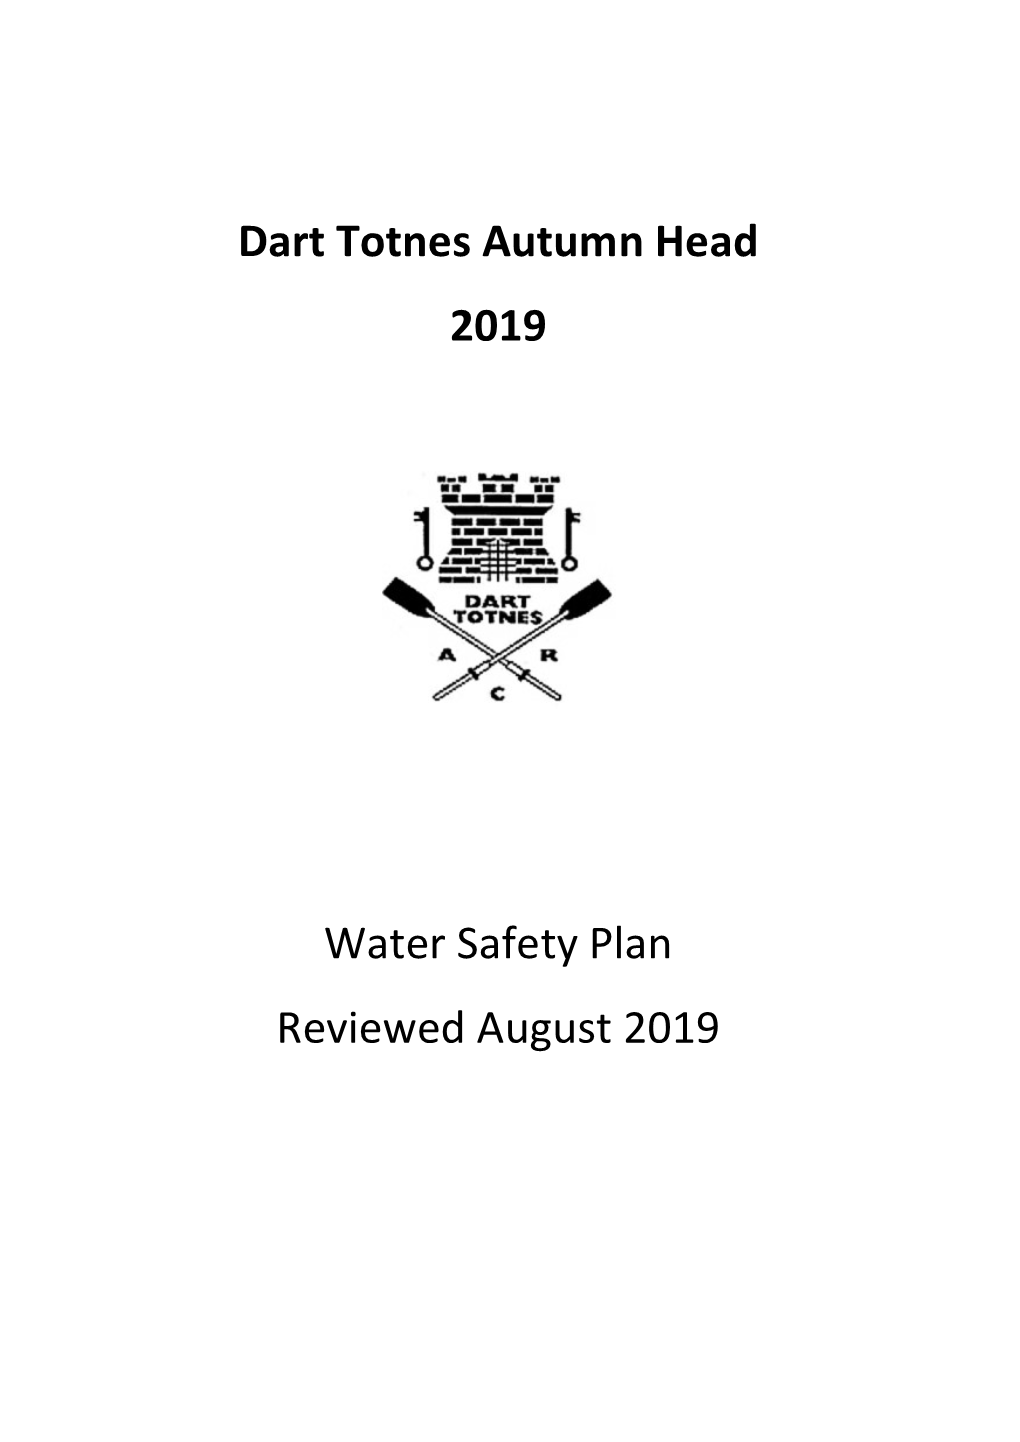 Dart Totnes Autumn Head 2019 Water Safety Plan Reviewed August 2019